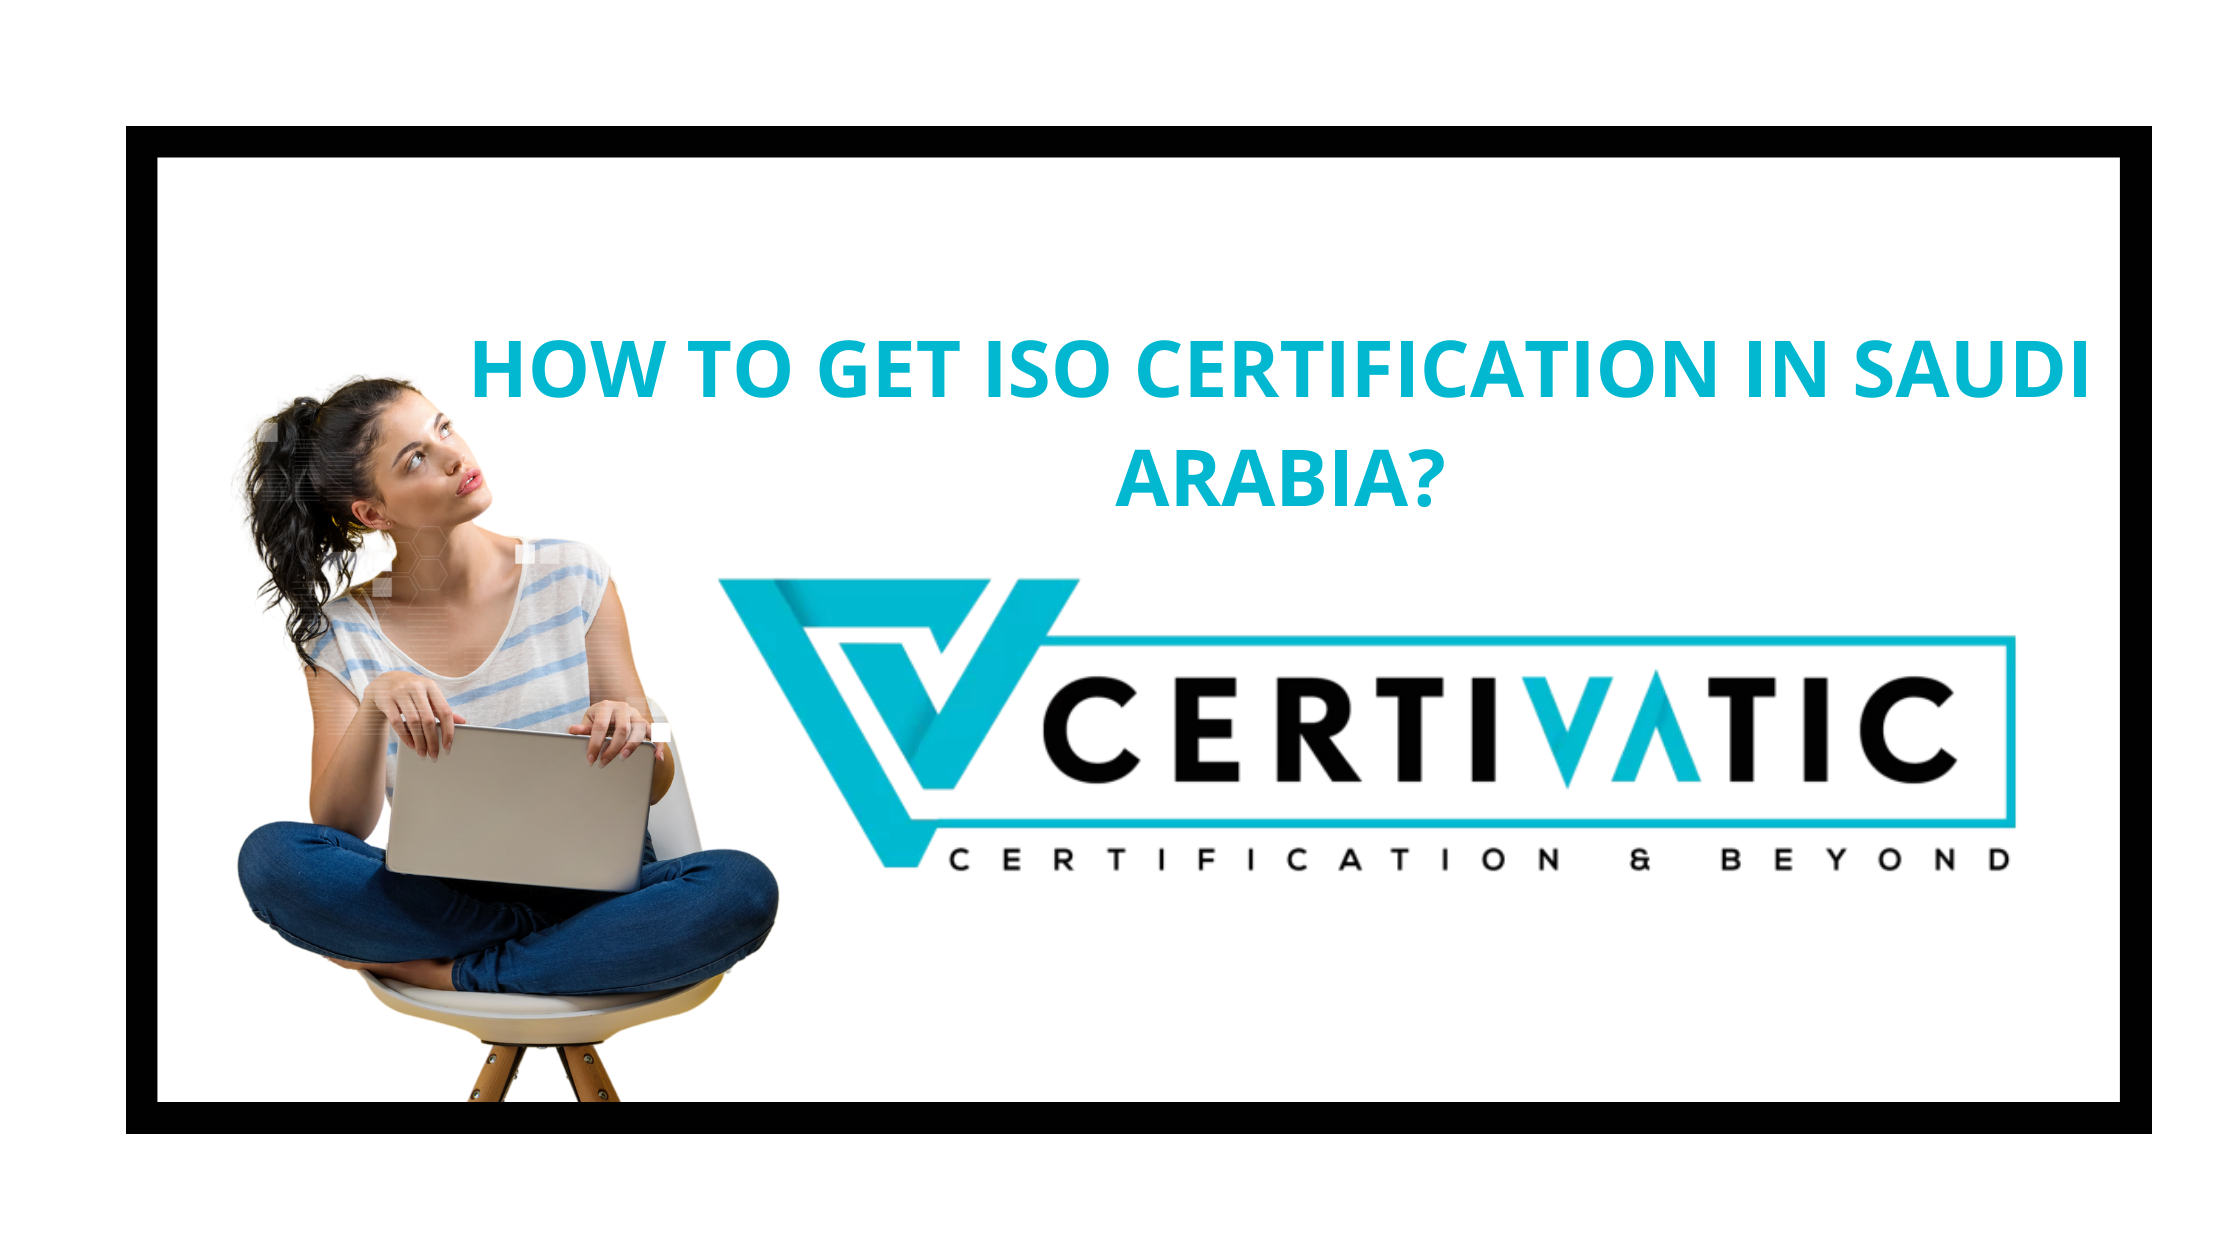 How to get ISO Certification in Saudi Arabia